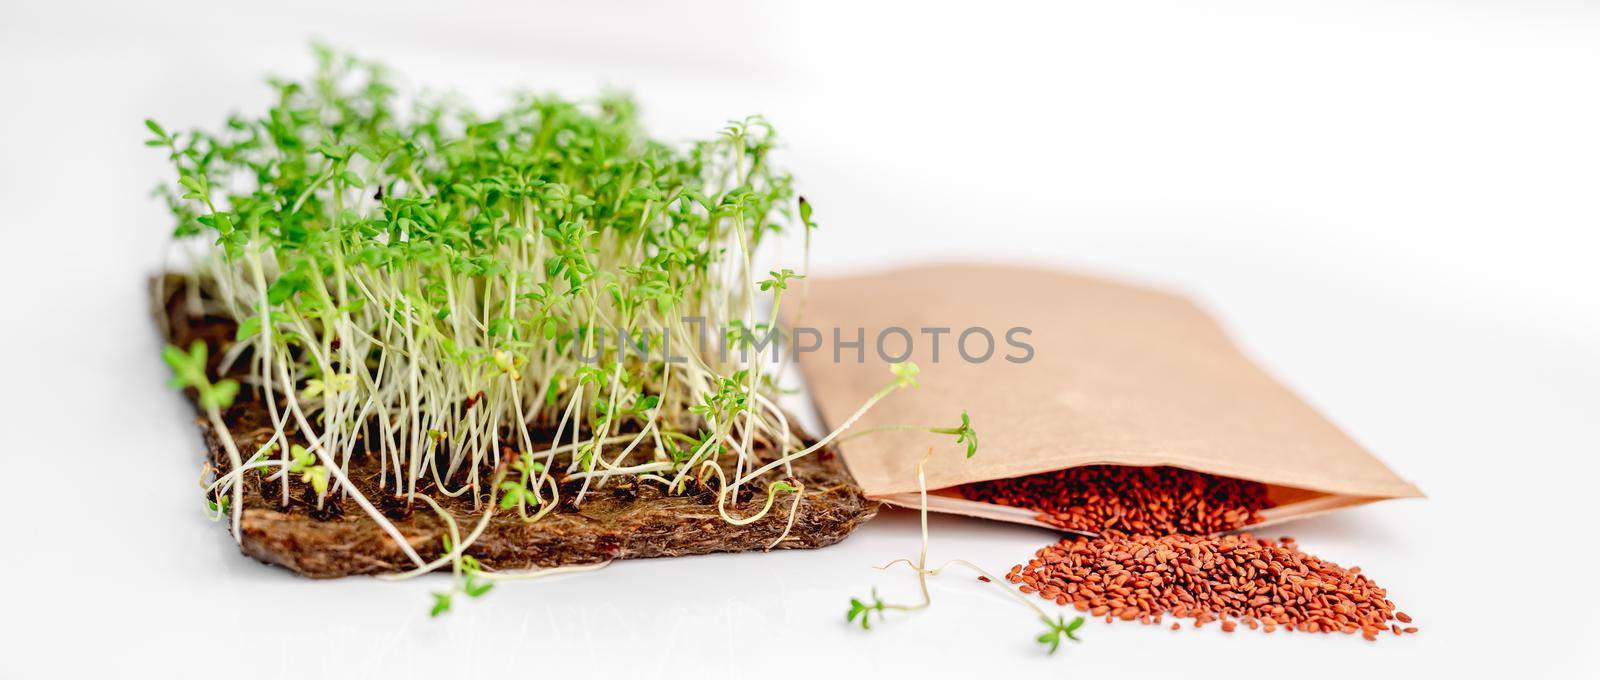 Flax microgreens with seeds by tan4ikk1